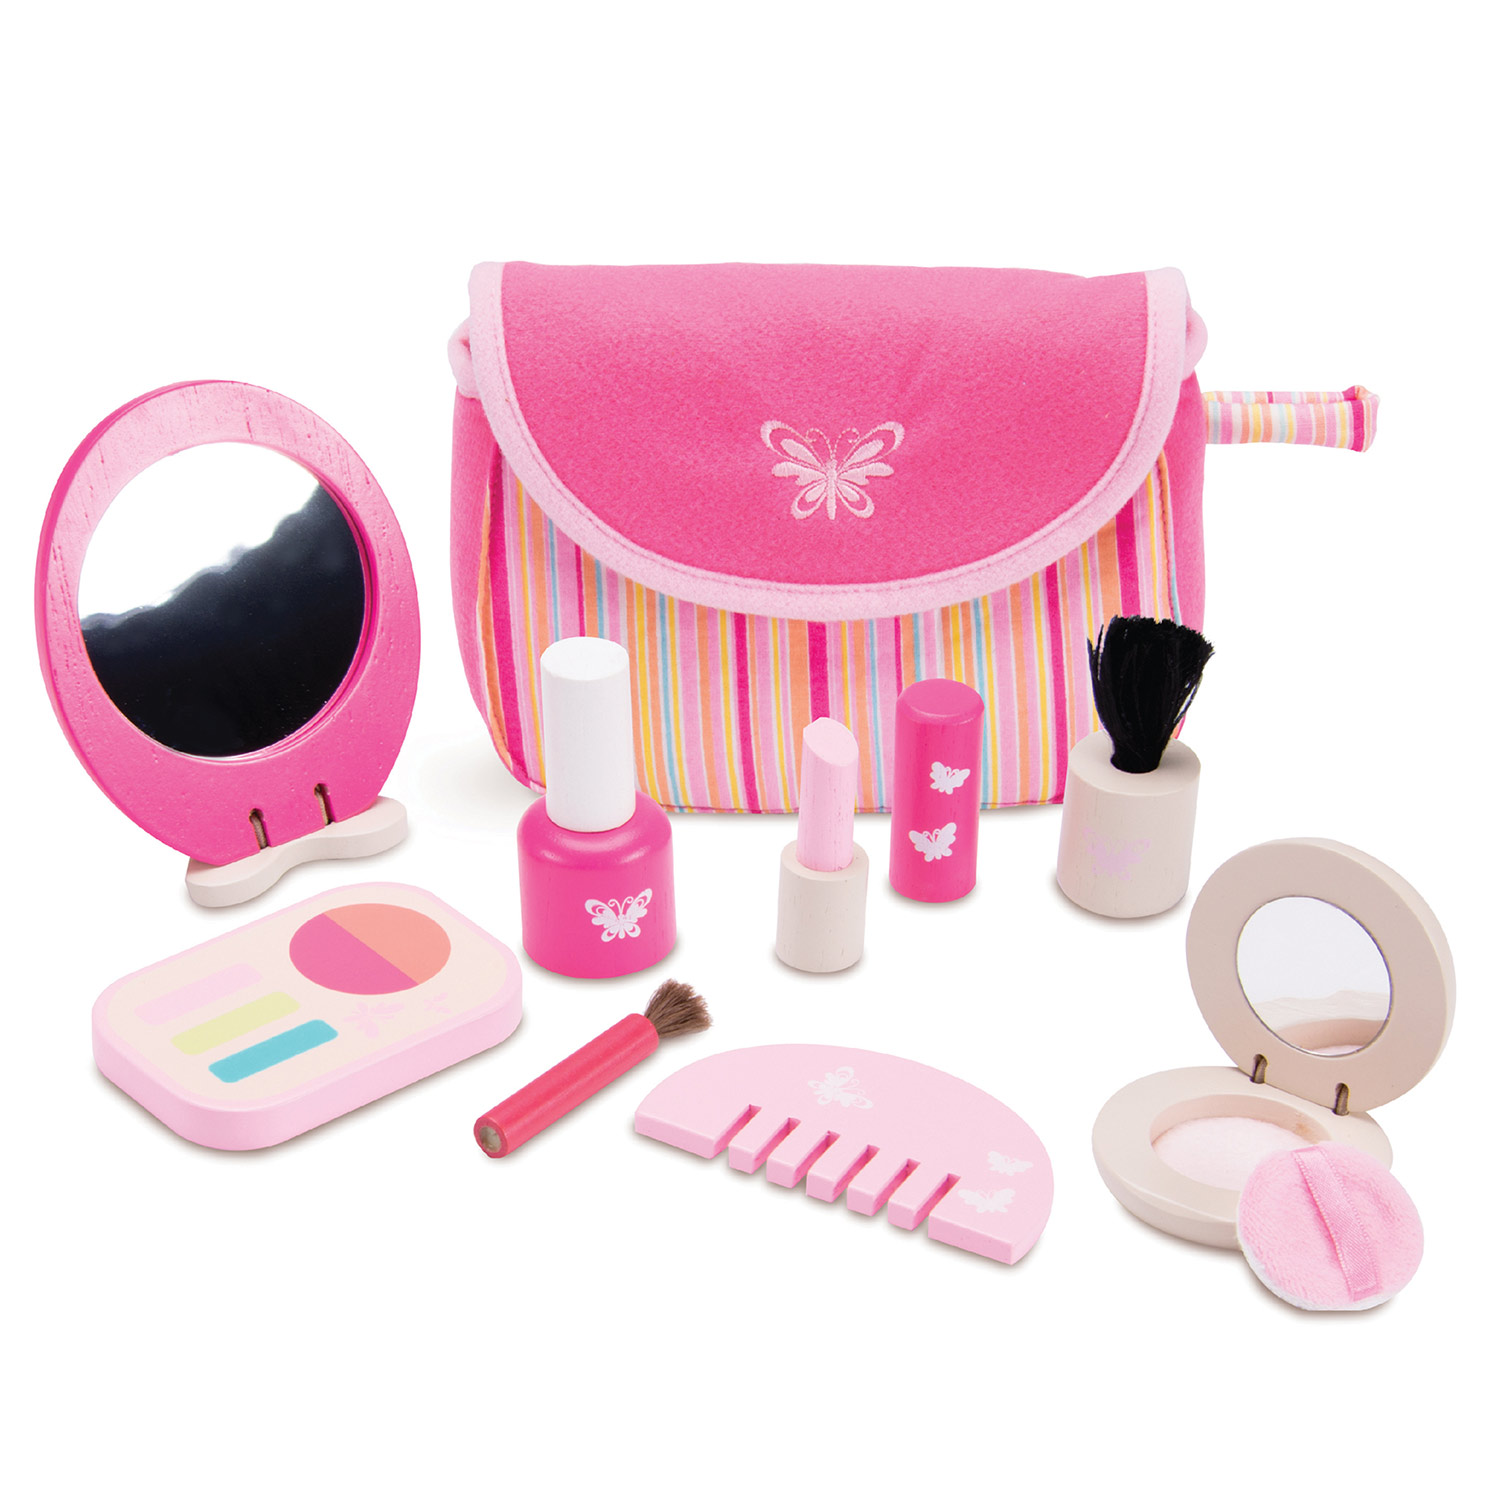 Fluisteren Vorige Klusjesman Houten Make-up Set Roze | Thimble Toys